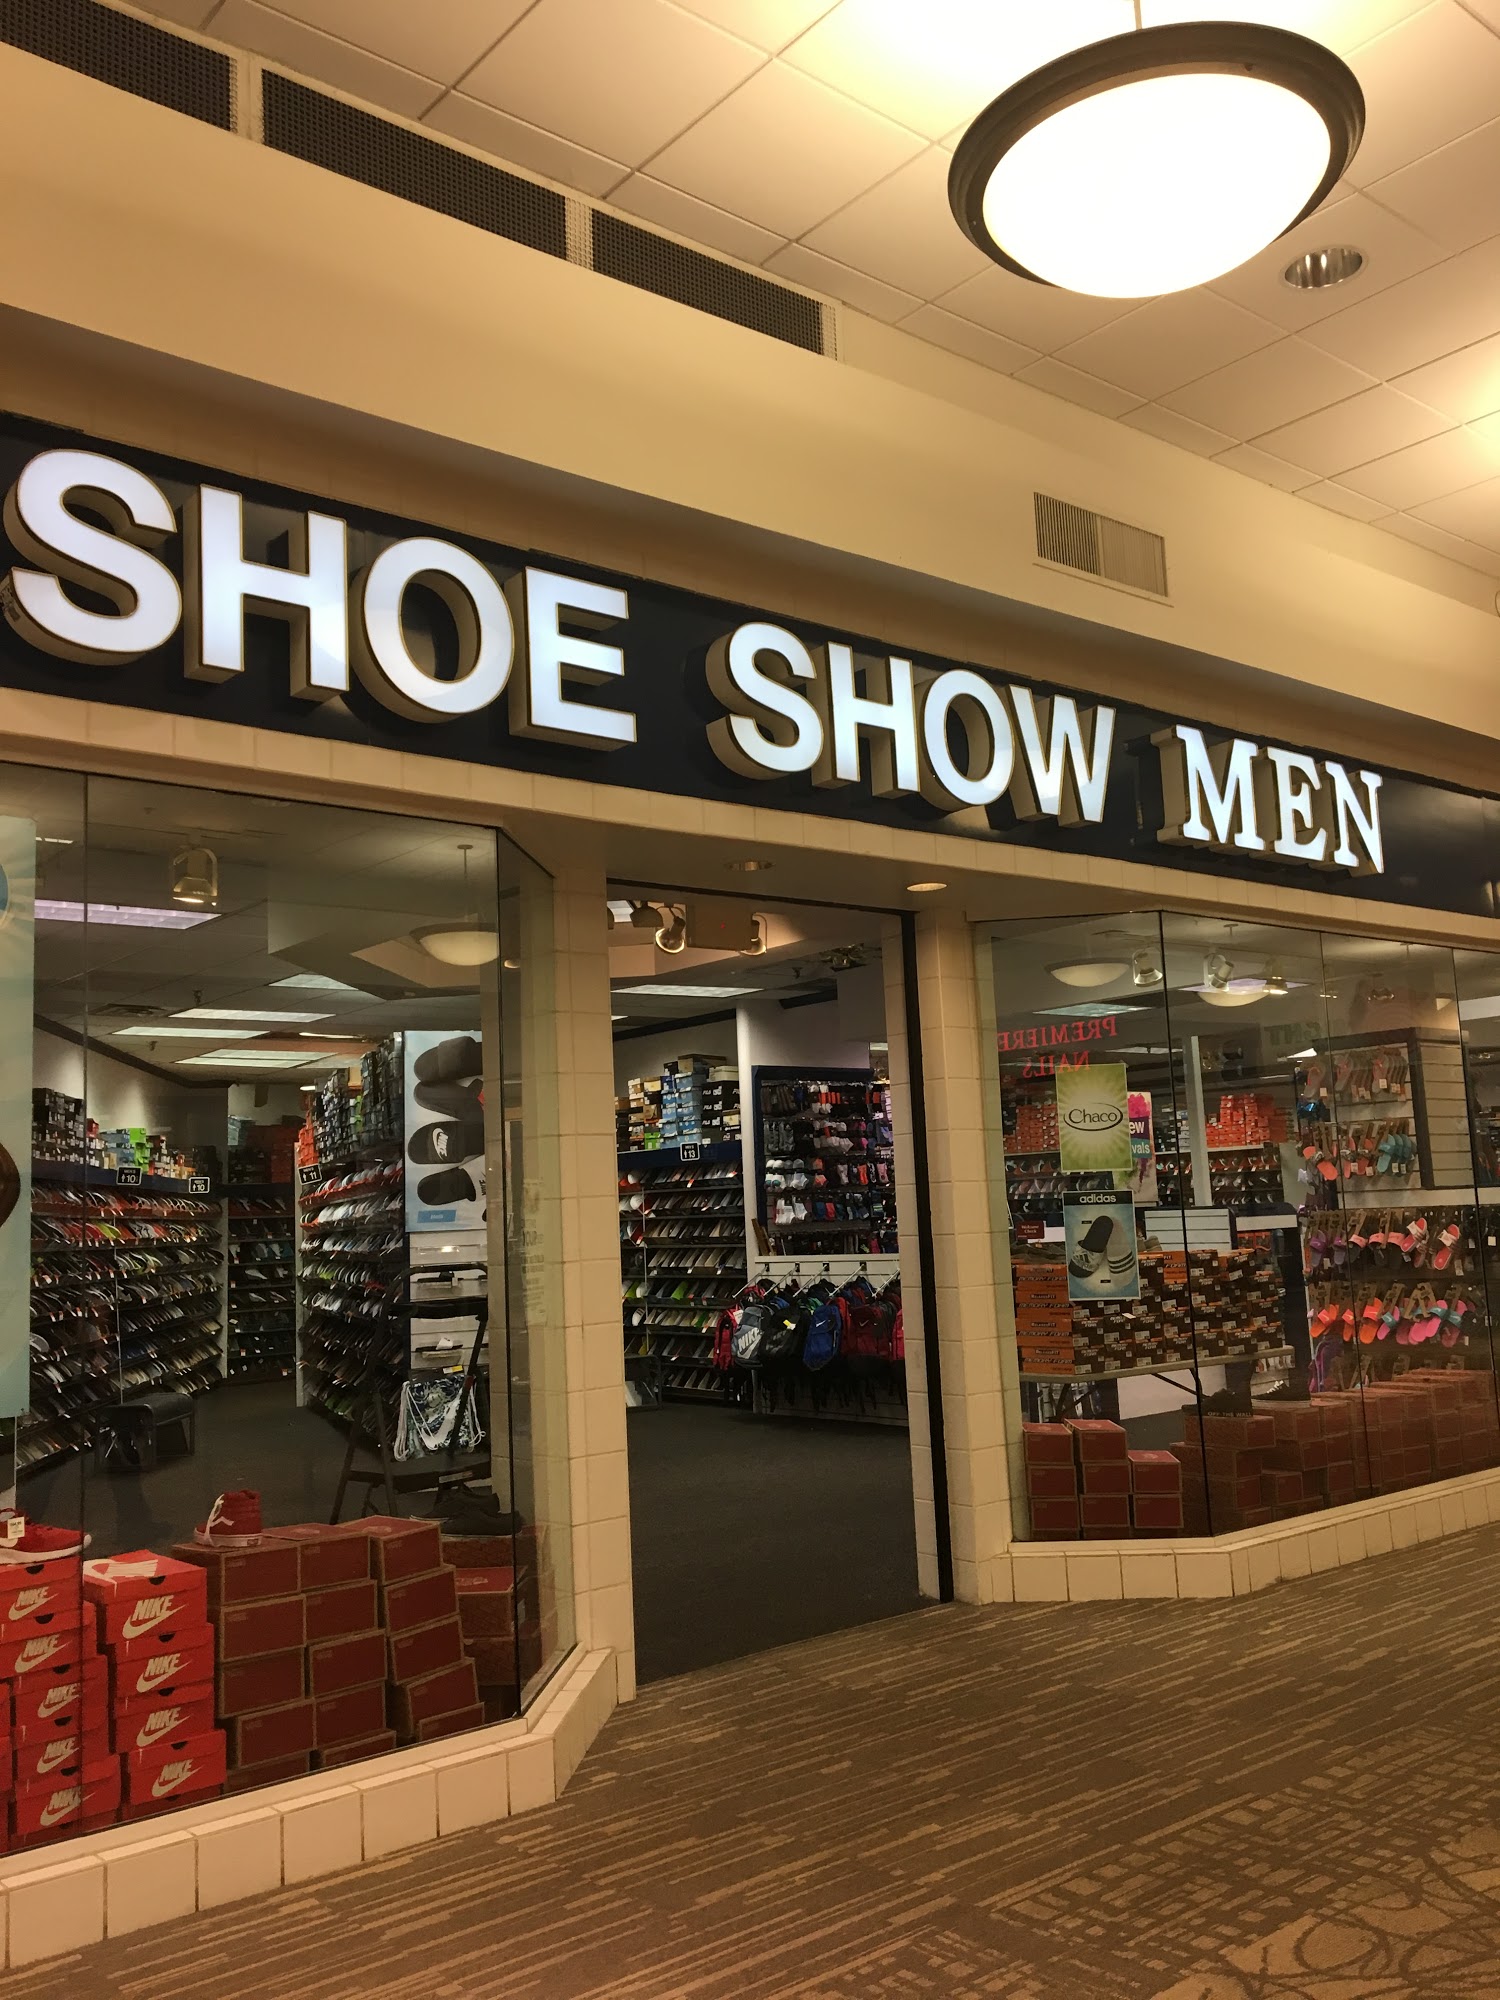 Shoe Show Mega